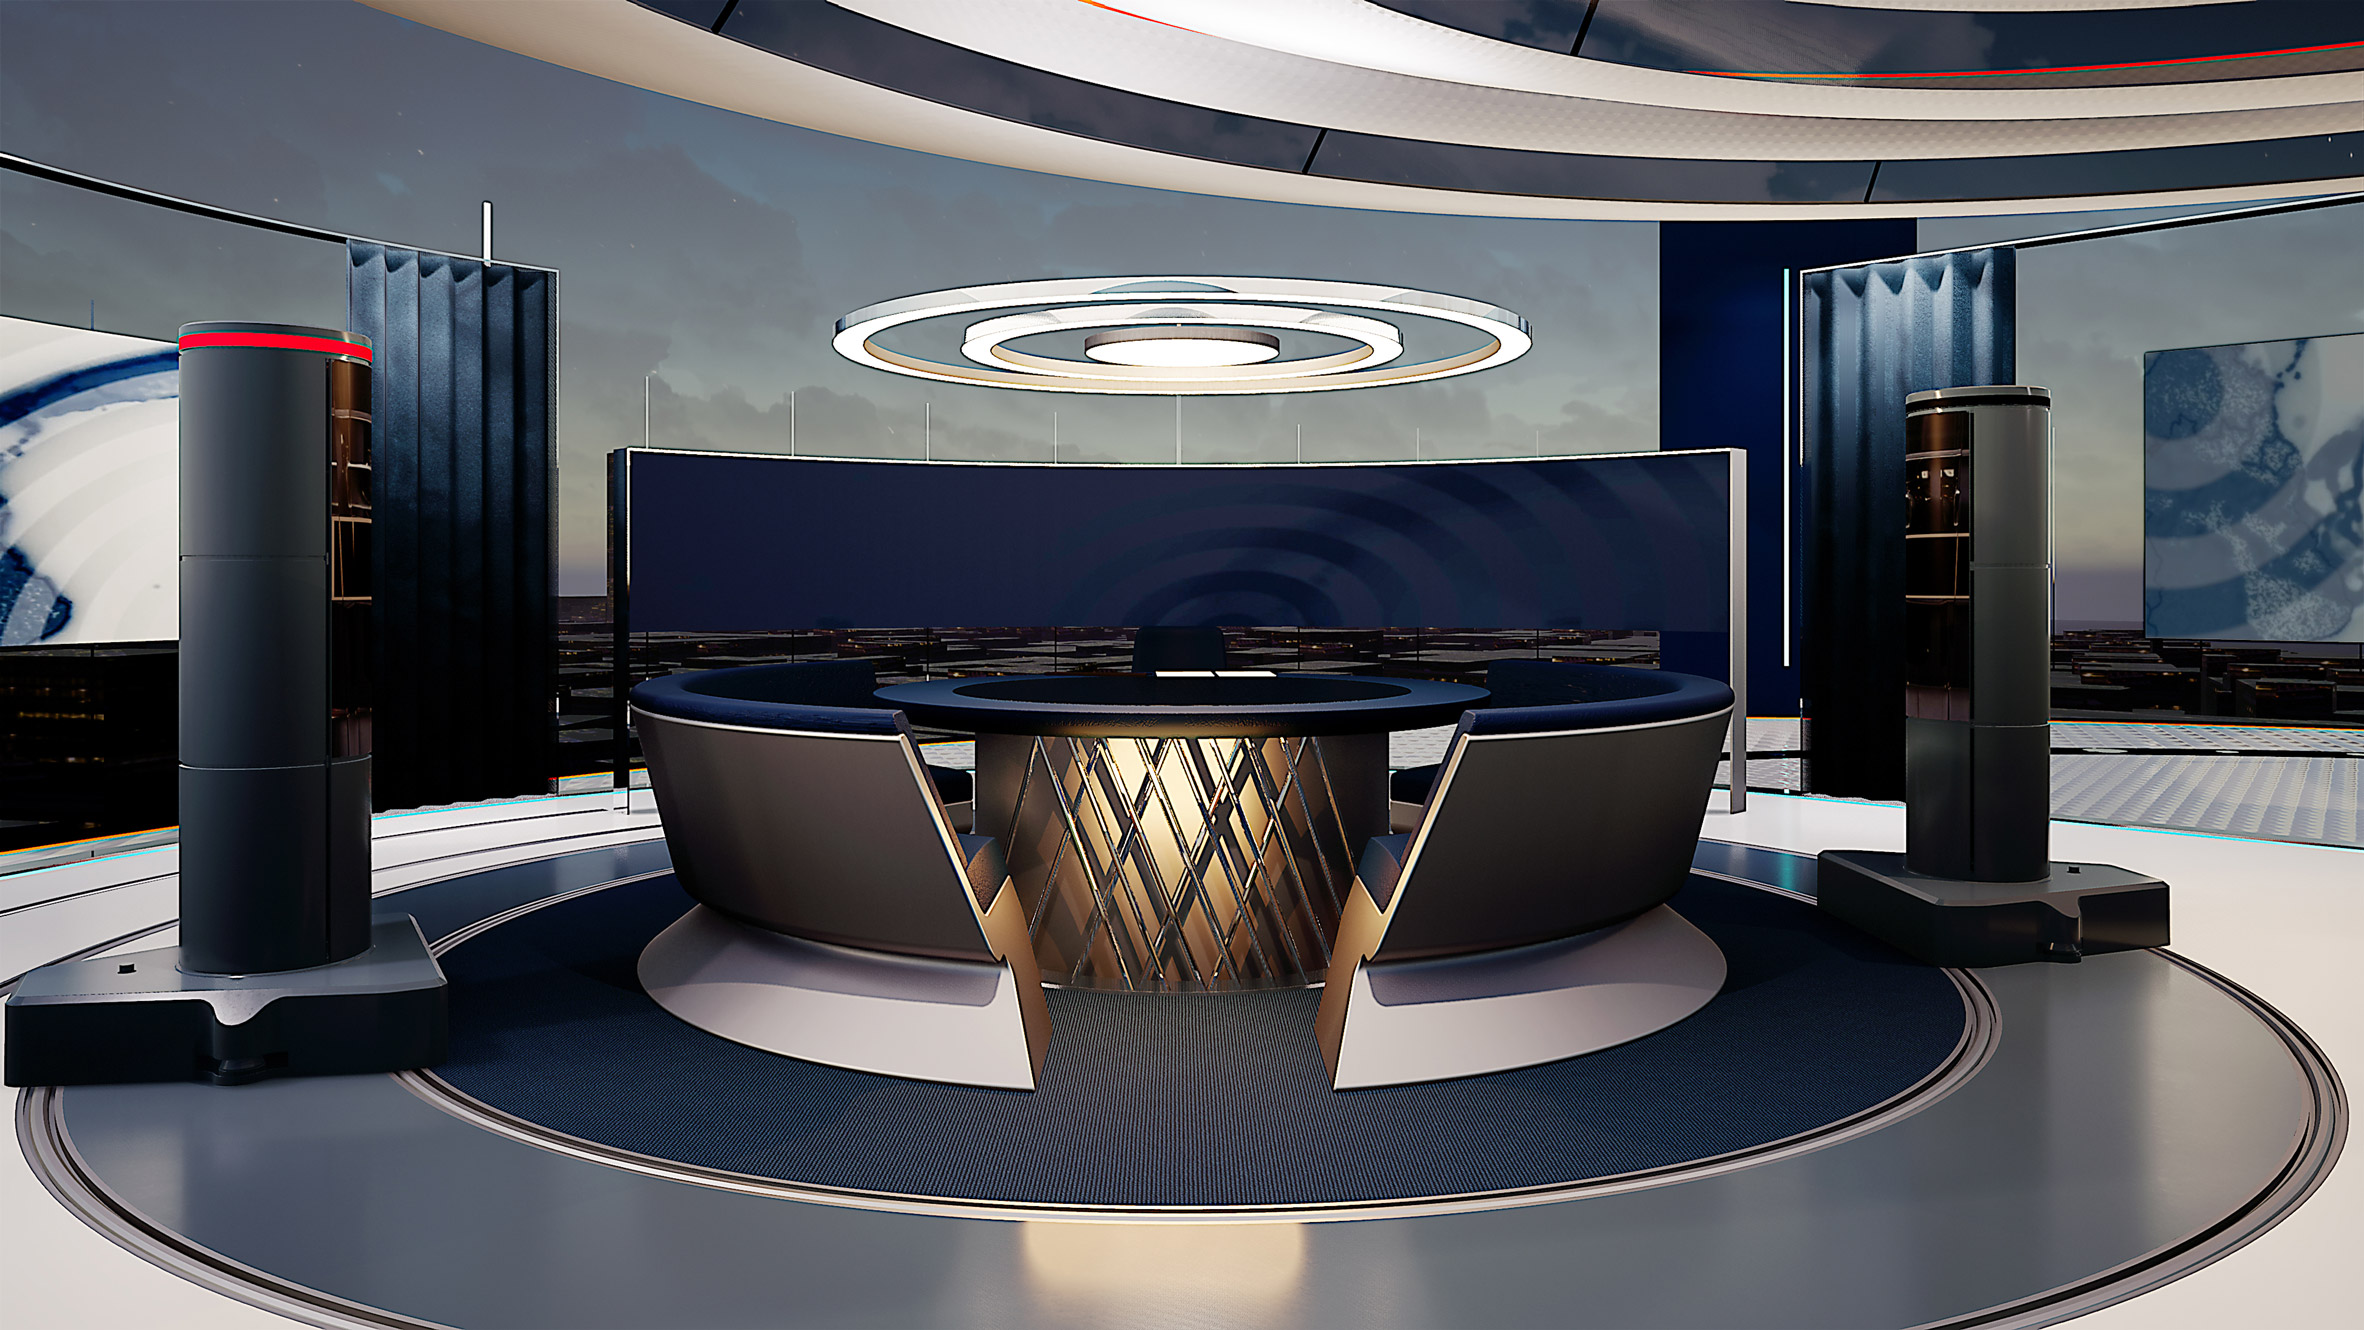 news studio set